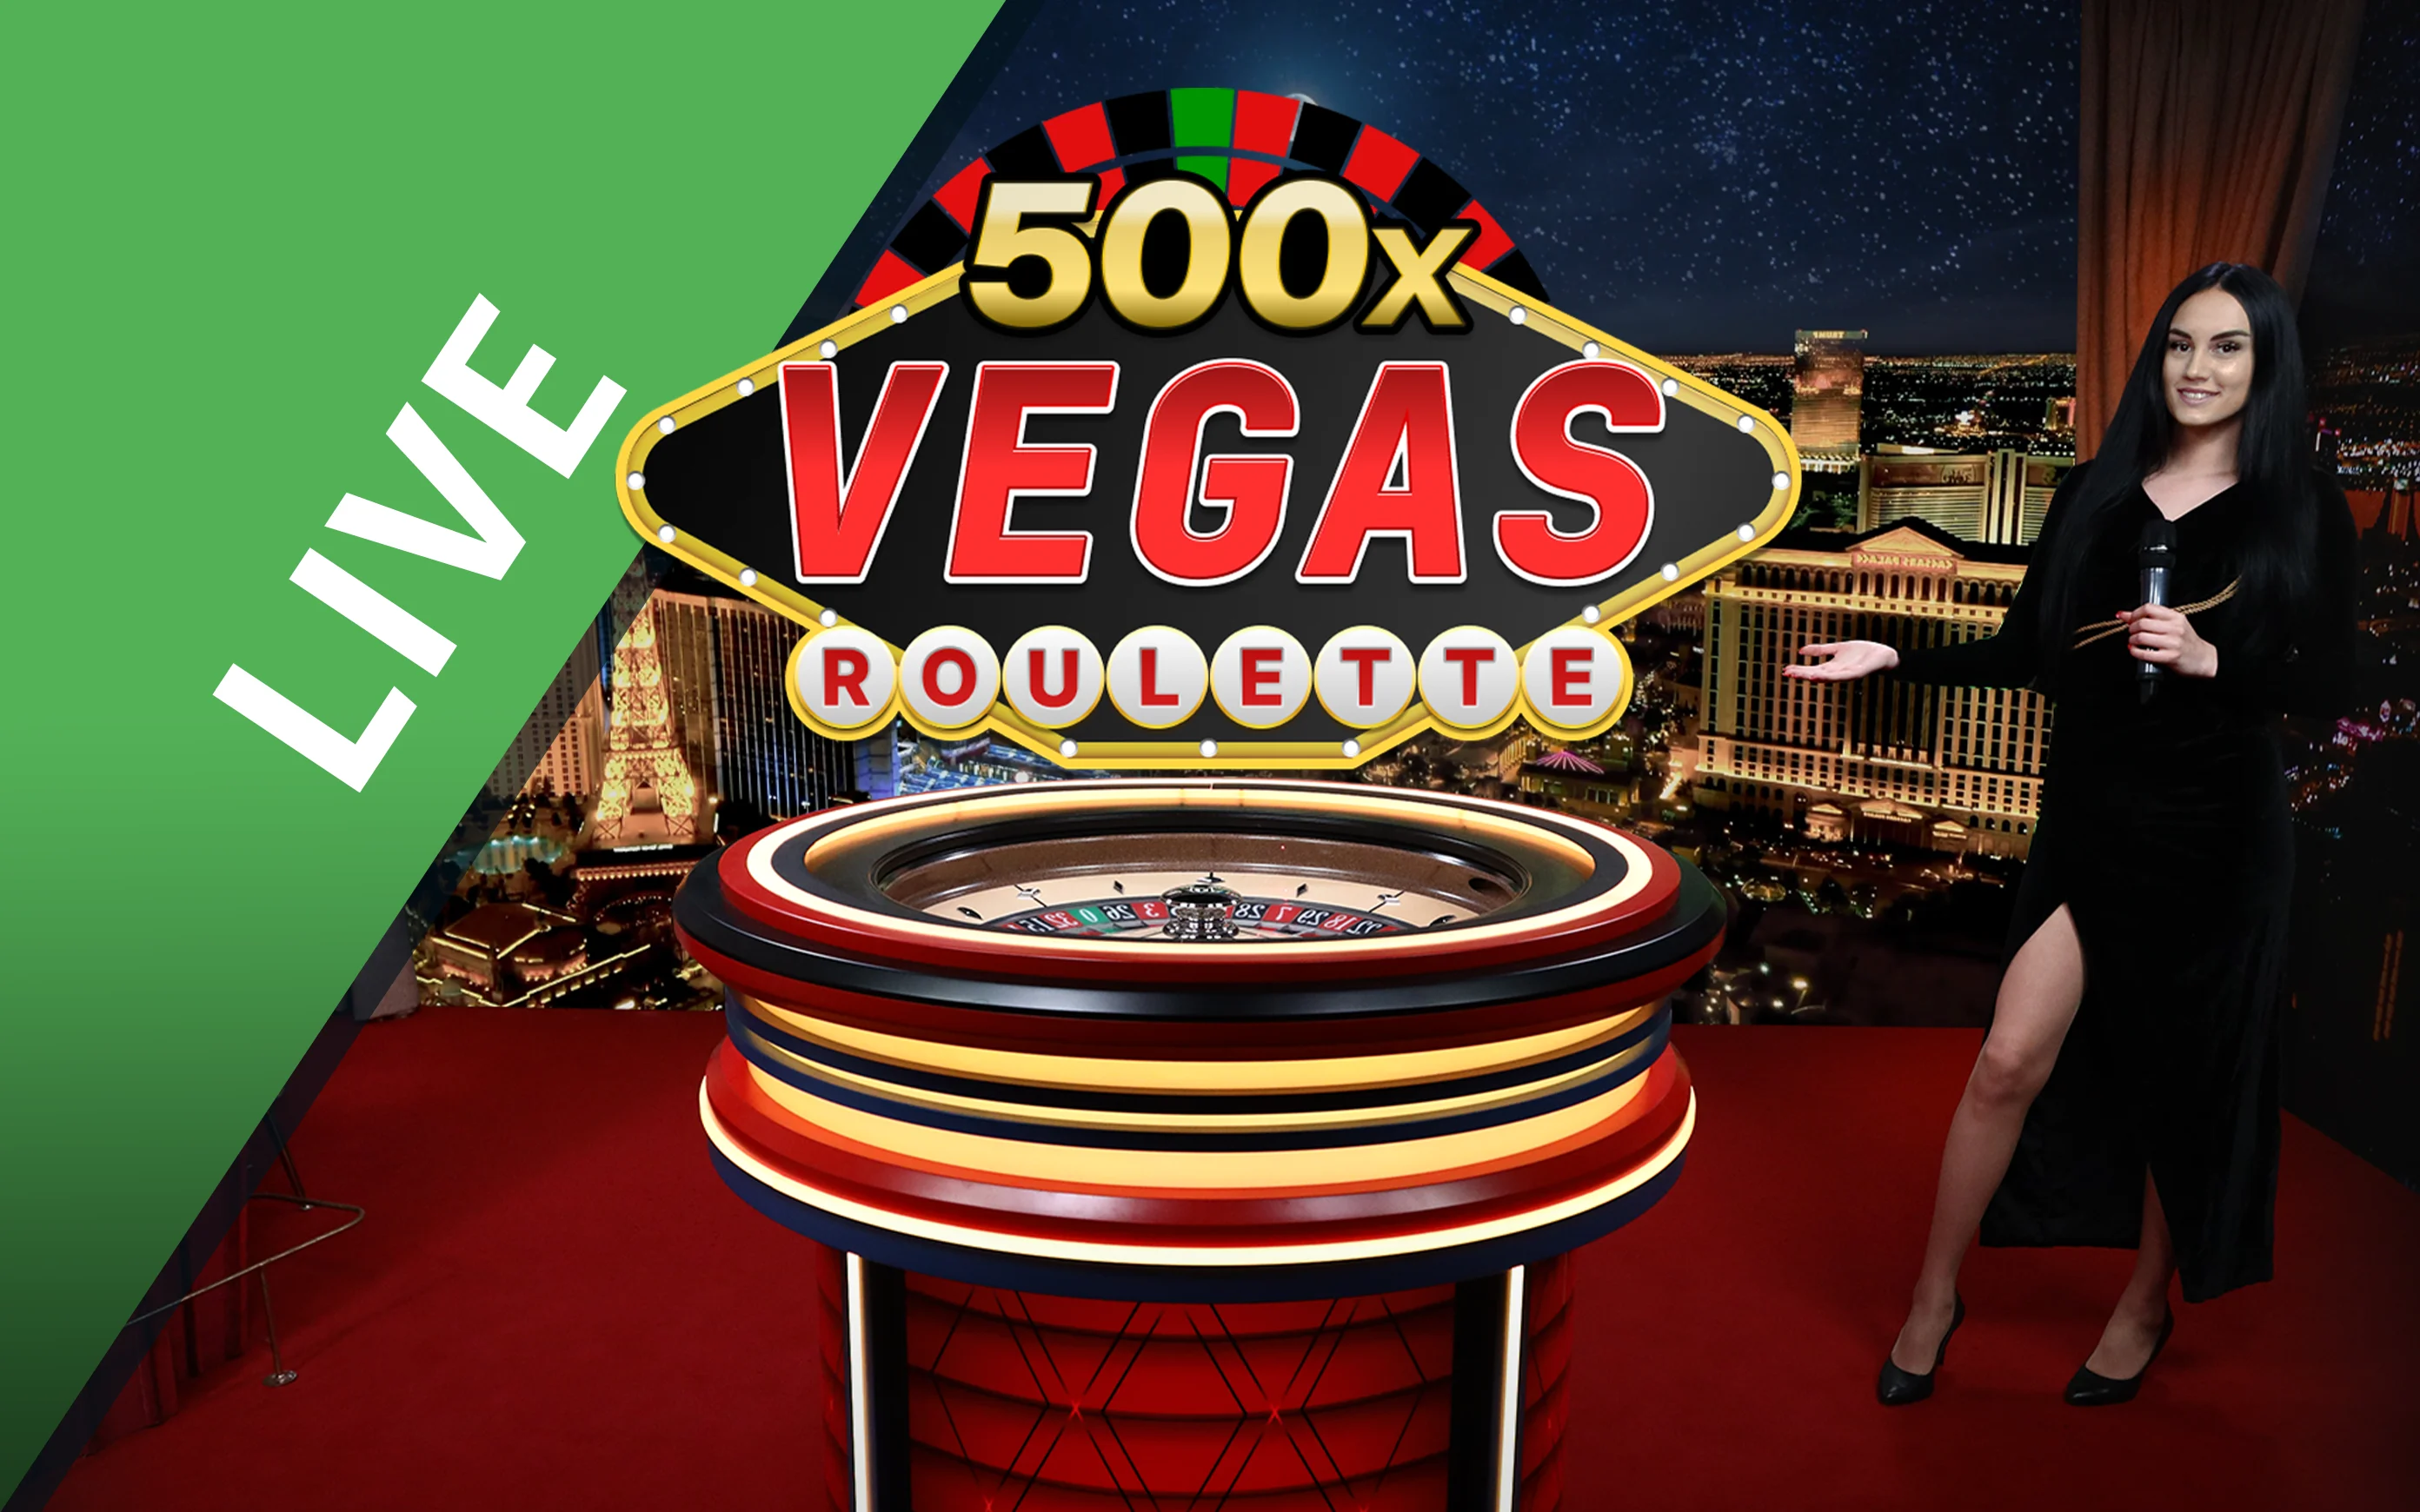 Play Vegas Roulette 500x on Starcasino.be online casino